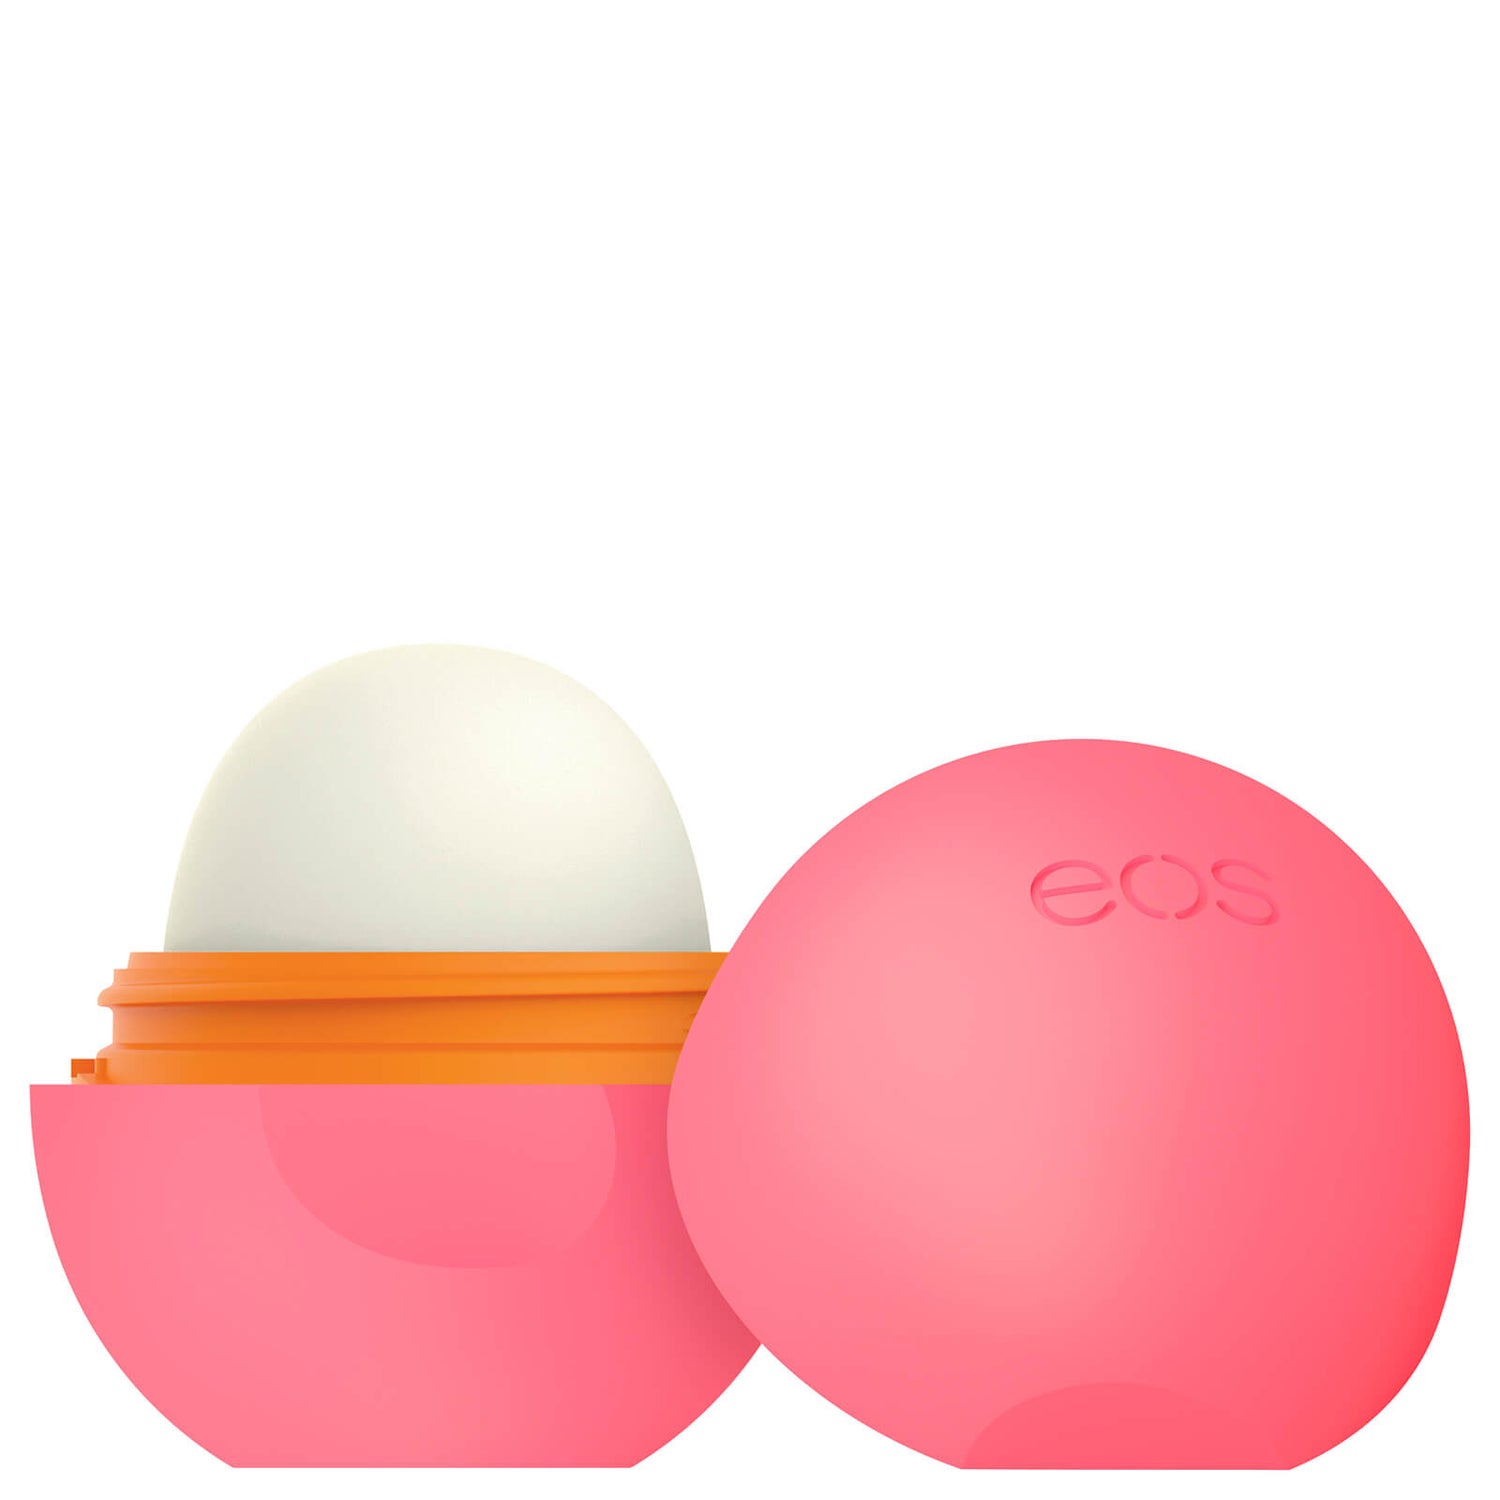 EOS Smooth Sphere Strawberry Balm 7g - lookfantastic